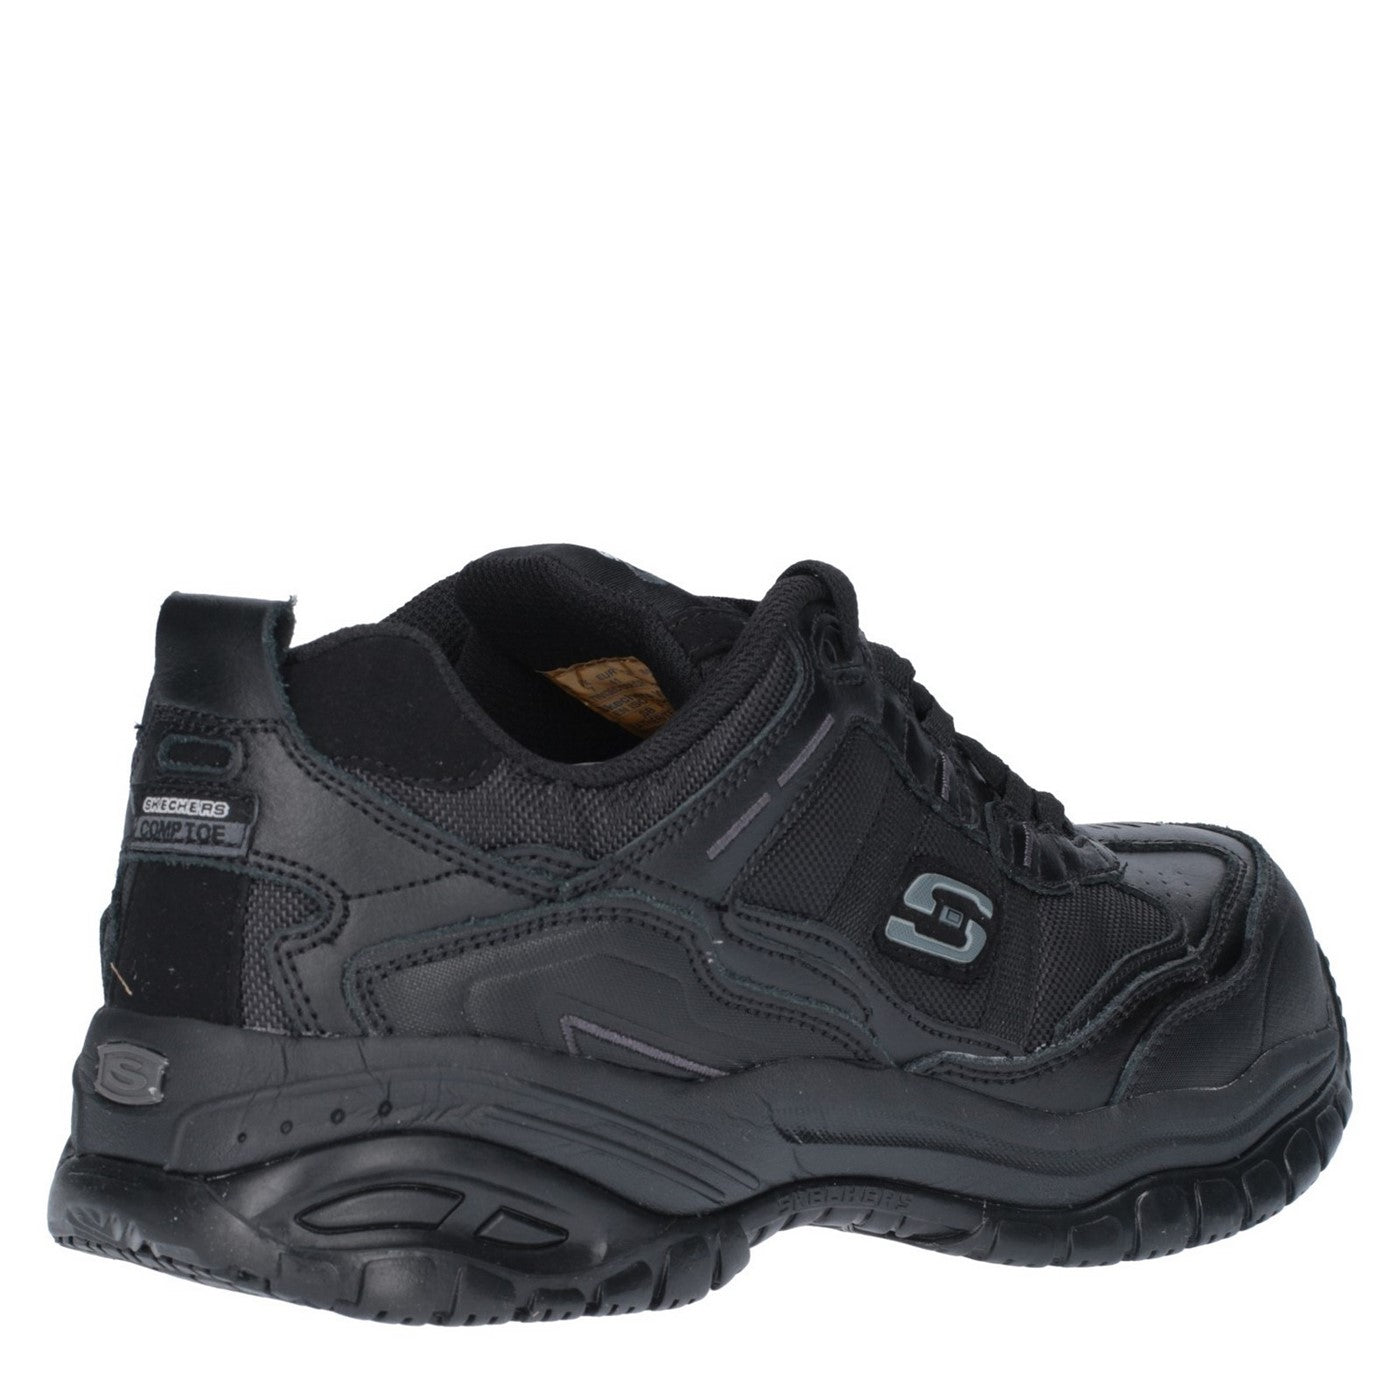 Men's Skechers Soft Stride - Grinnell Safety Shoe